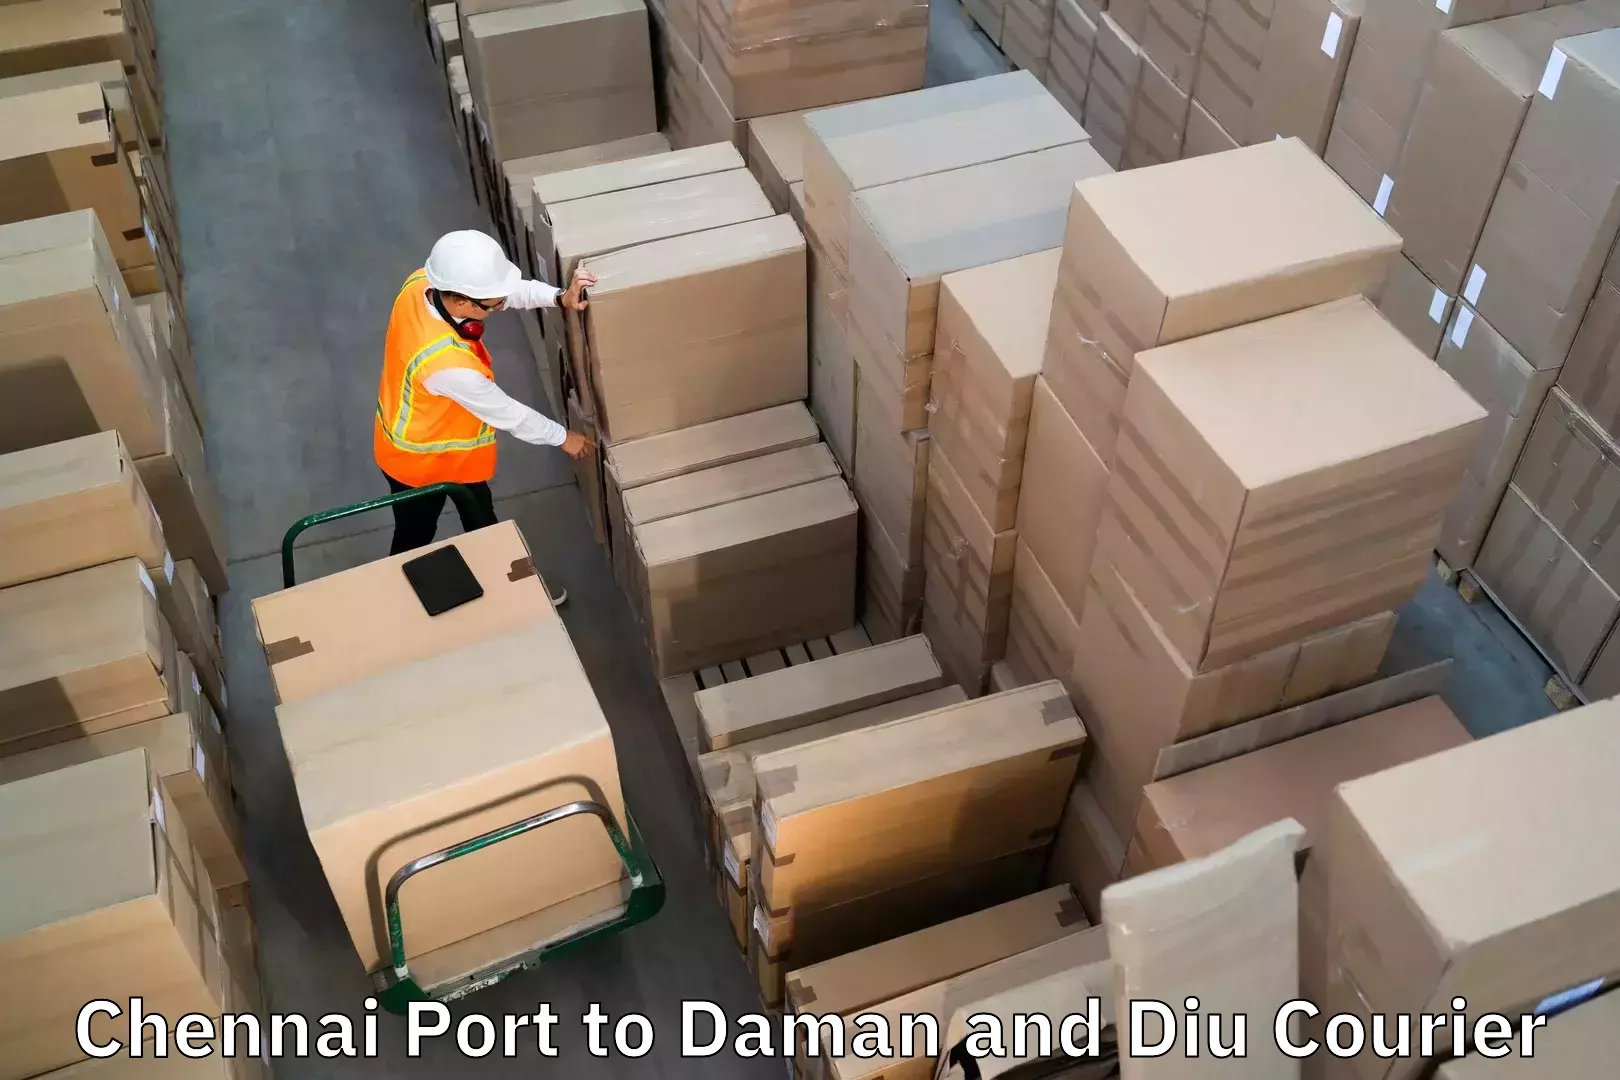 Luggage shipment processing in Chennai Port to Diu